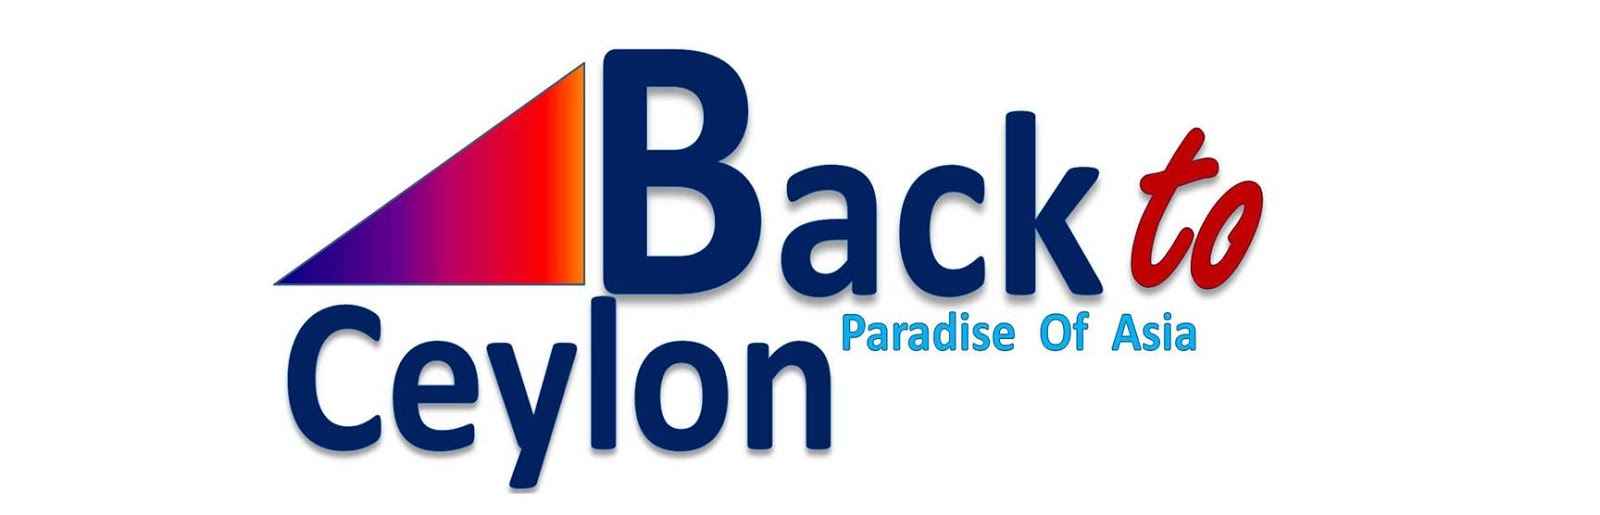 Back To Ceylon